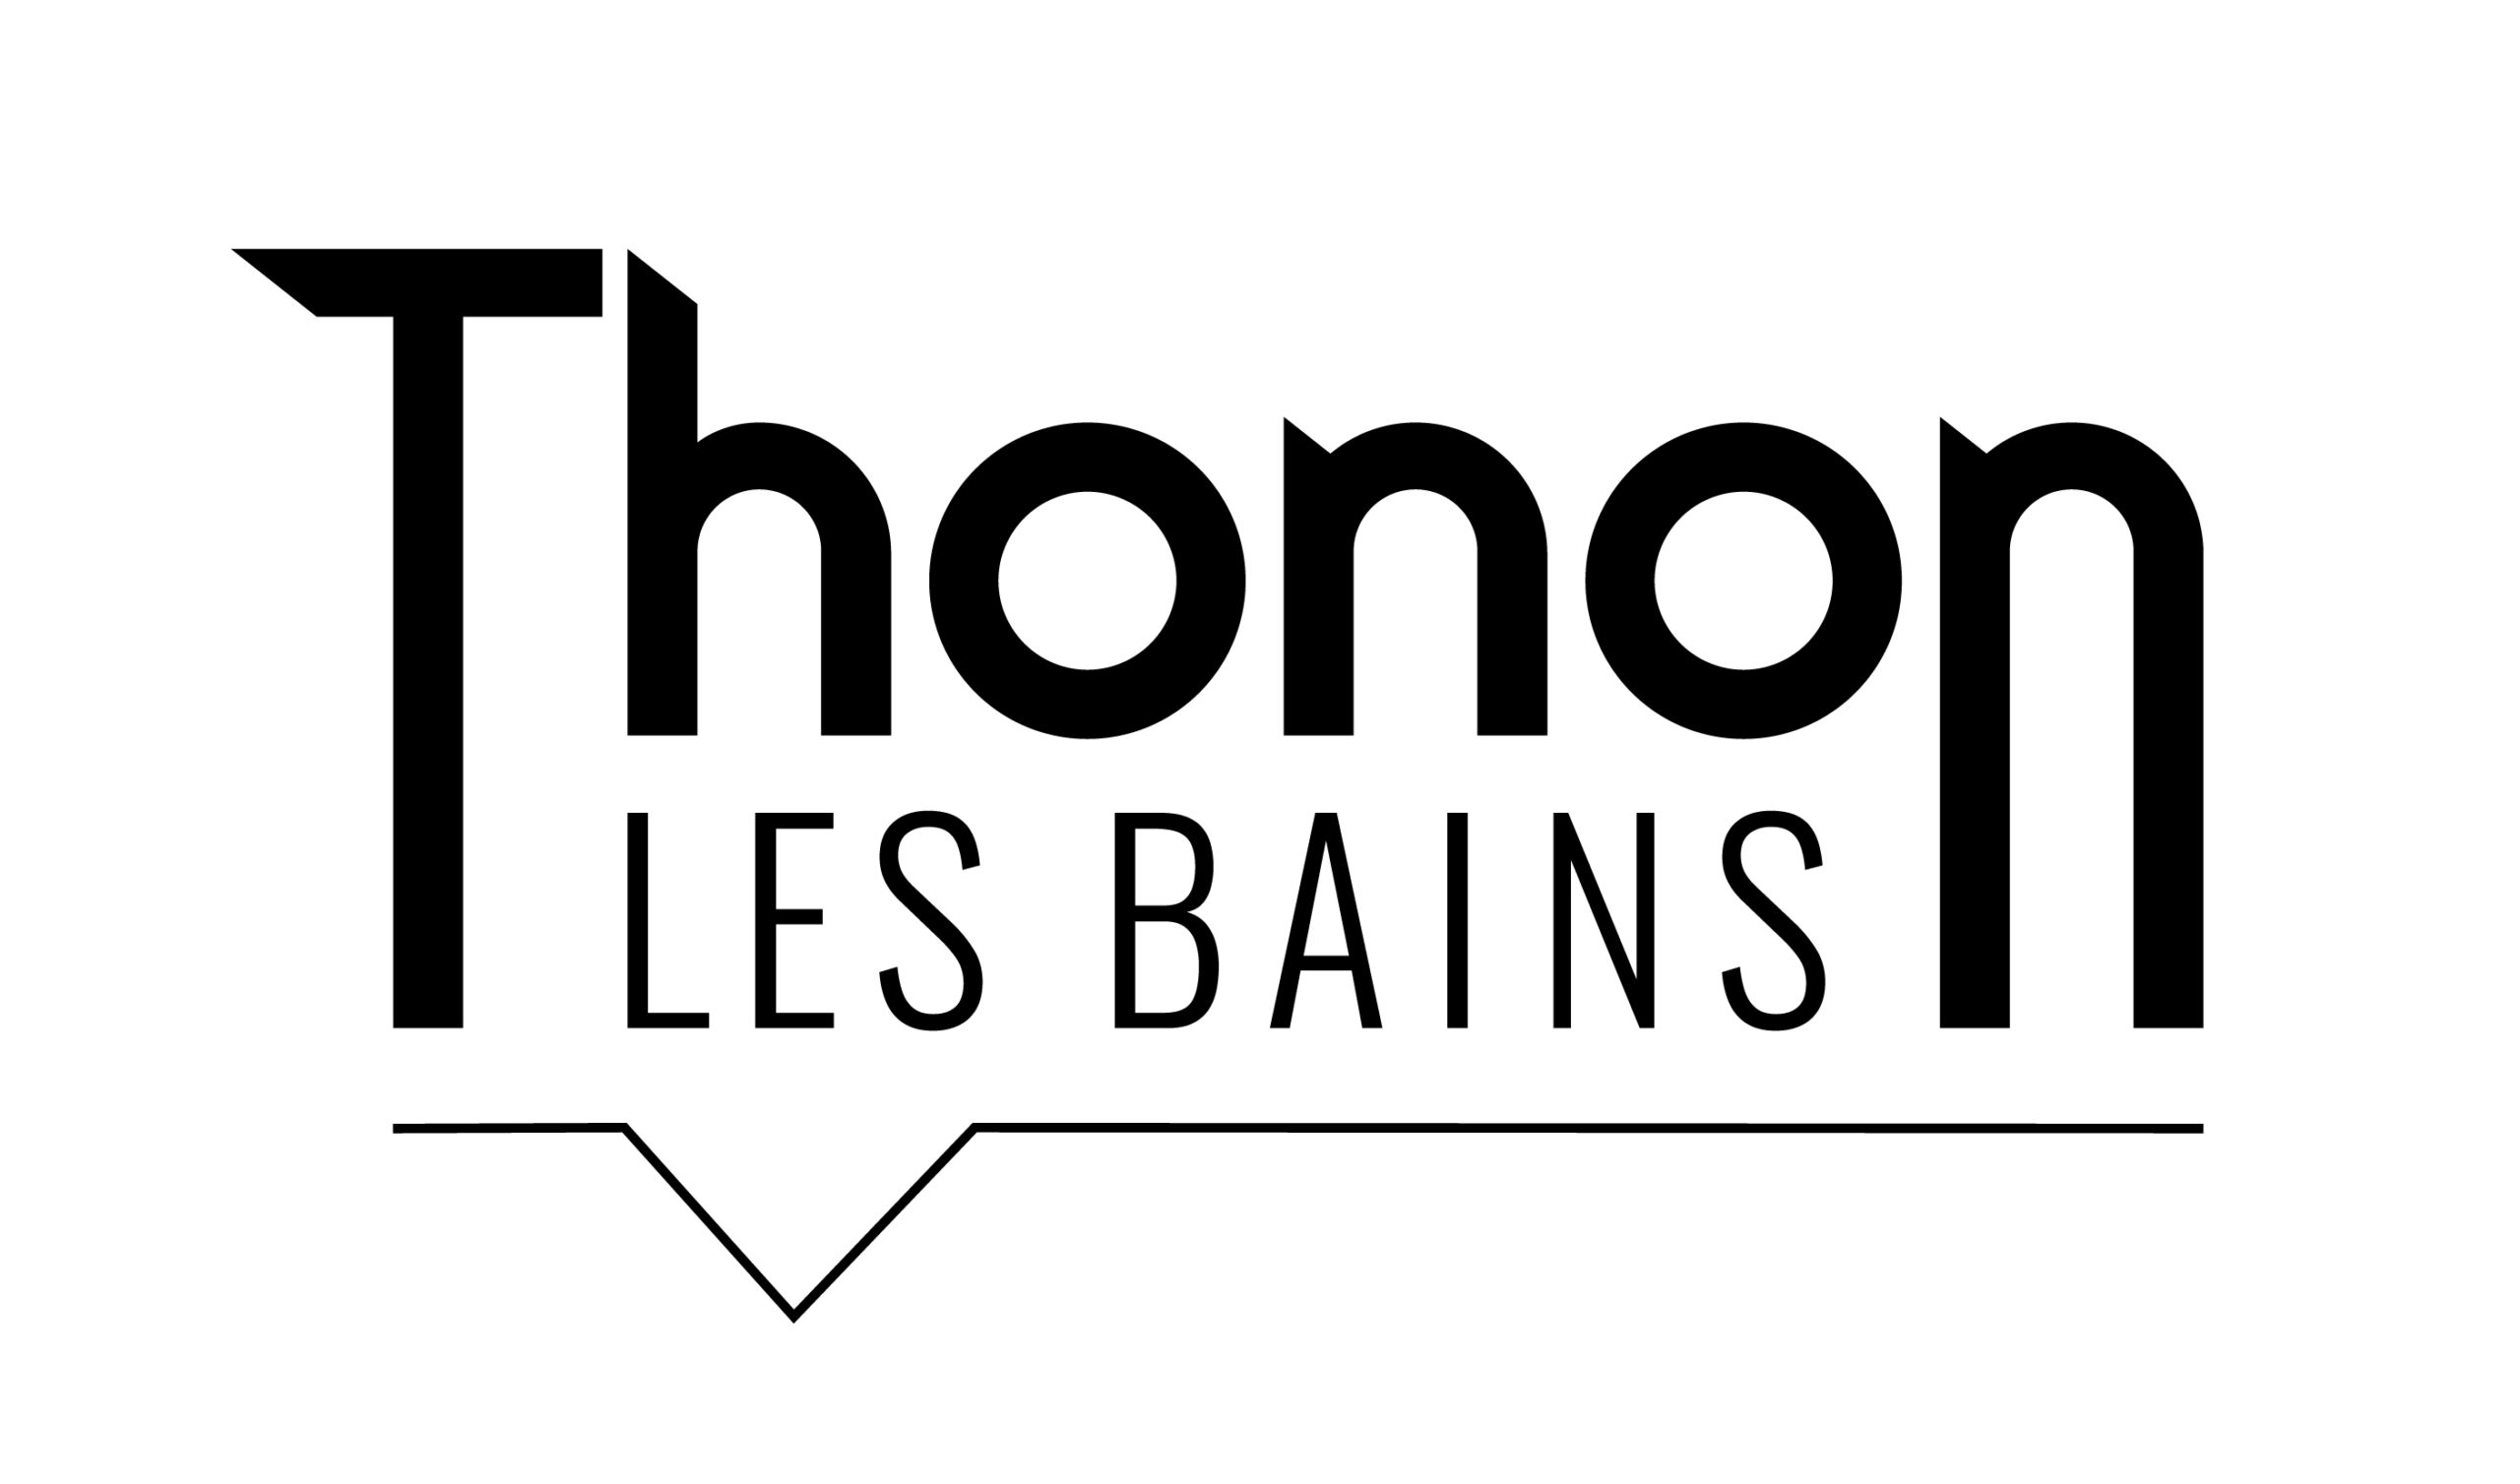 Logo Thonon-les-Bains